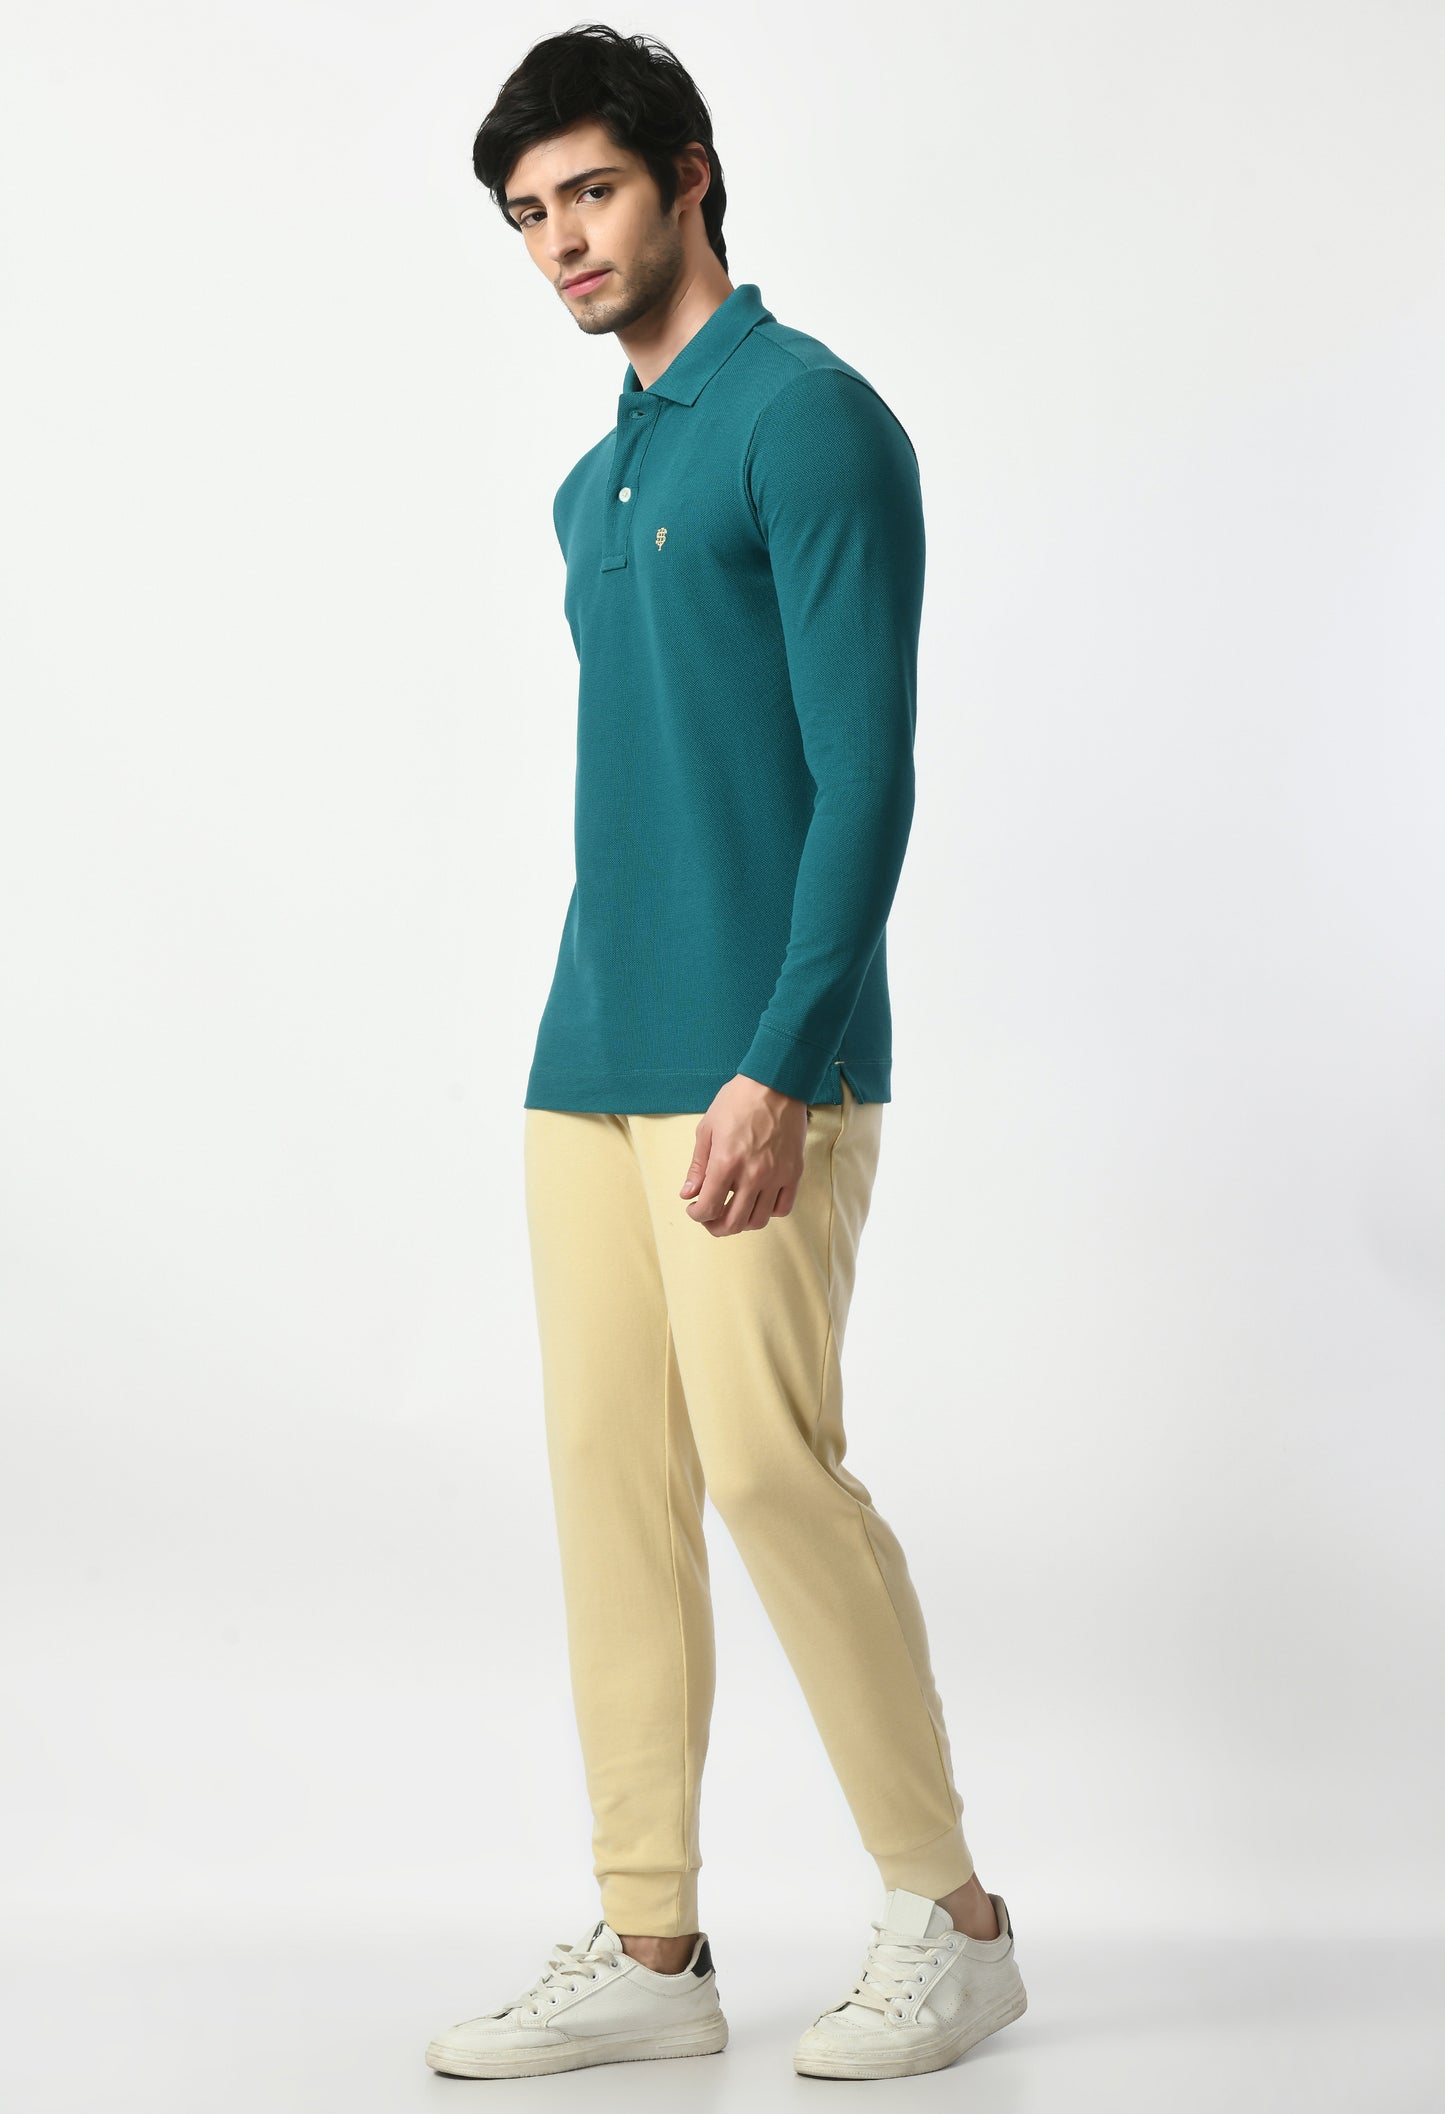 Concept 11 Full sleeve | Premium Polo for Men | Teal